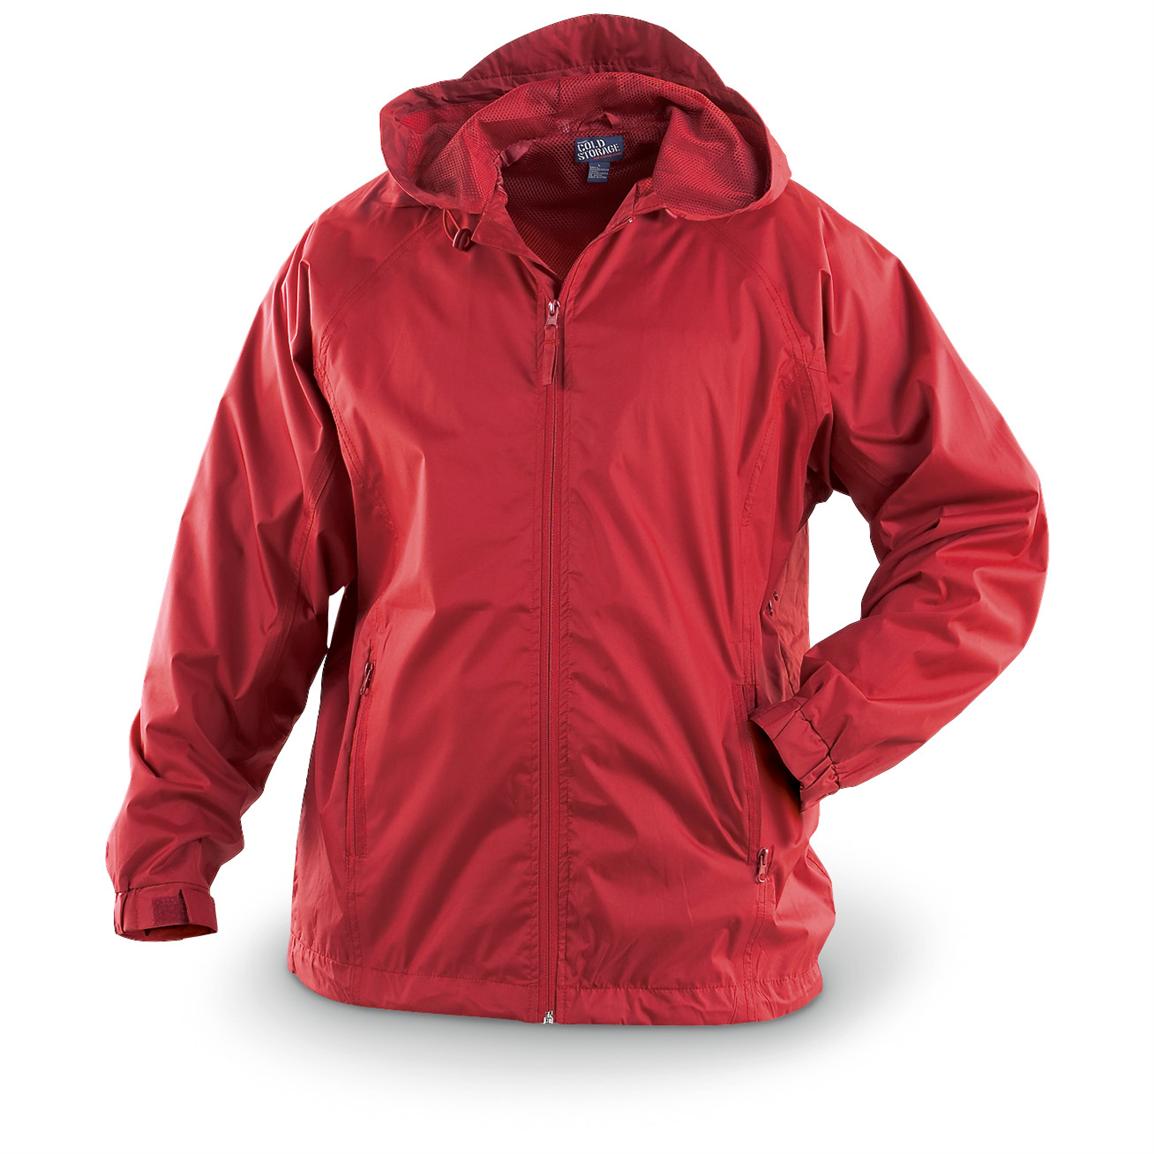 Cold Storage® Waterproof Jacket - 155158, Rain Jackets & Rain Gear at